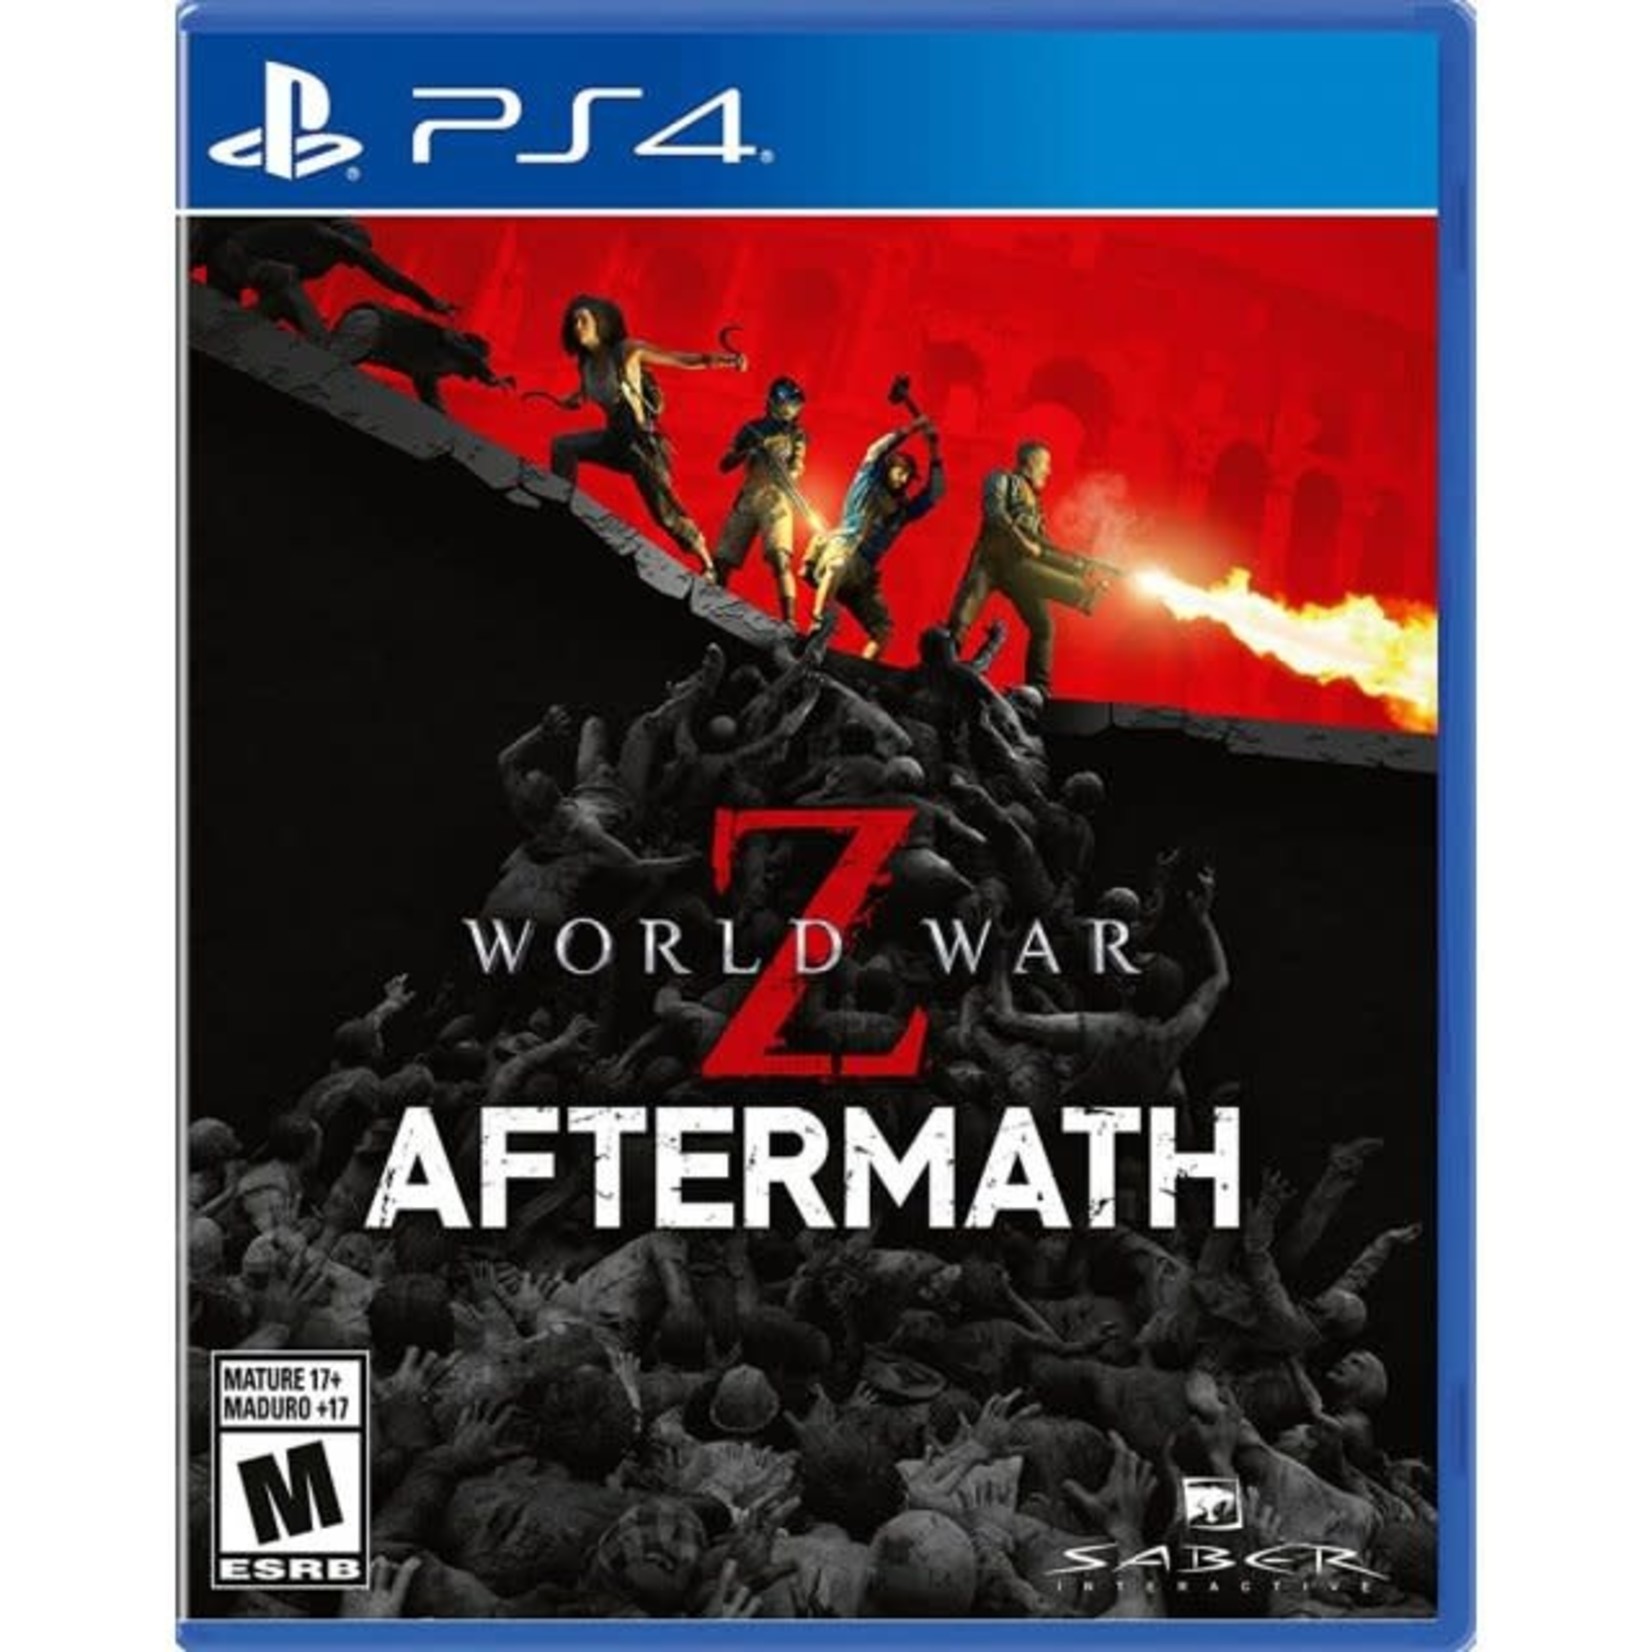 PS4-World War Z Aftermath